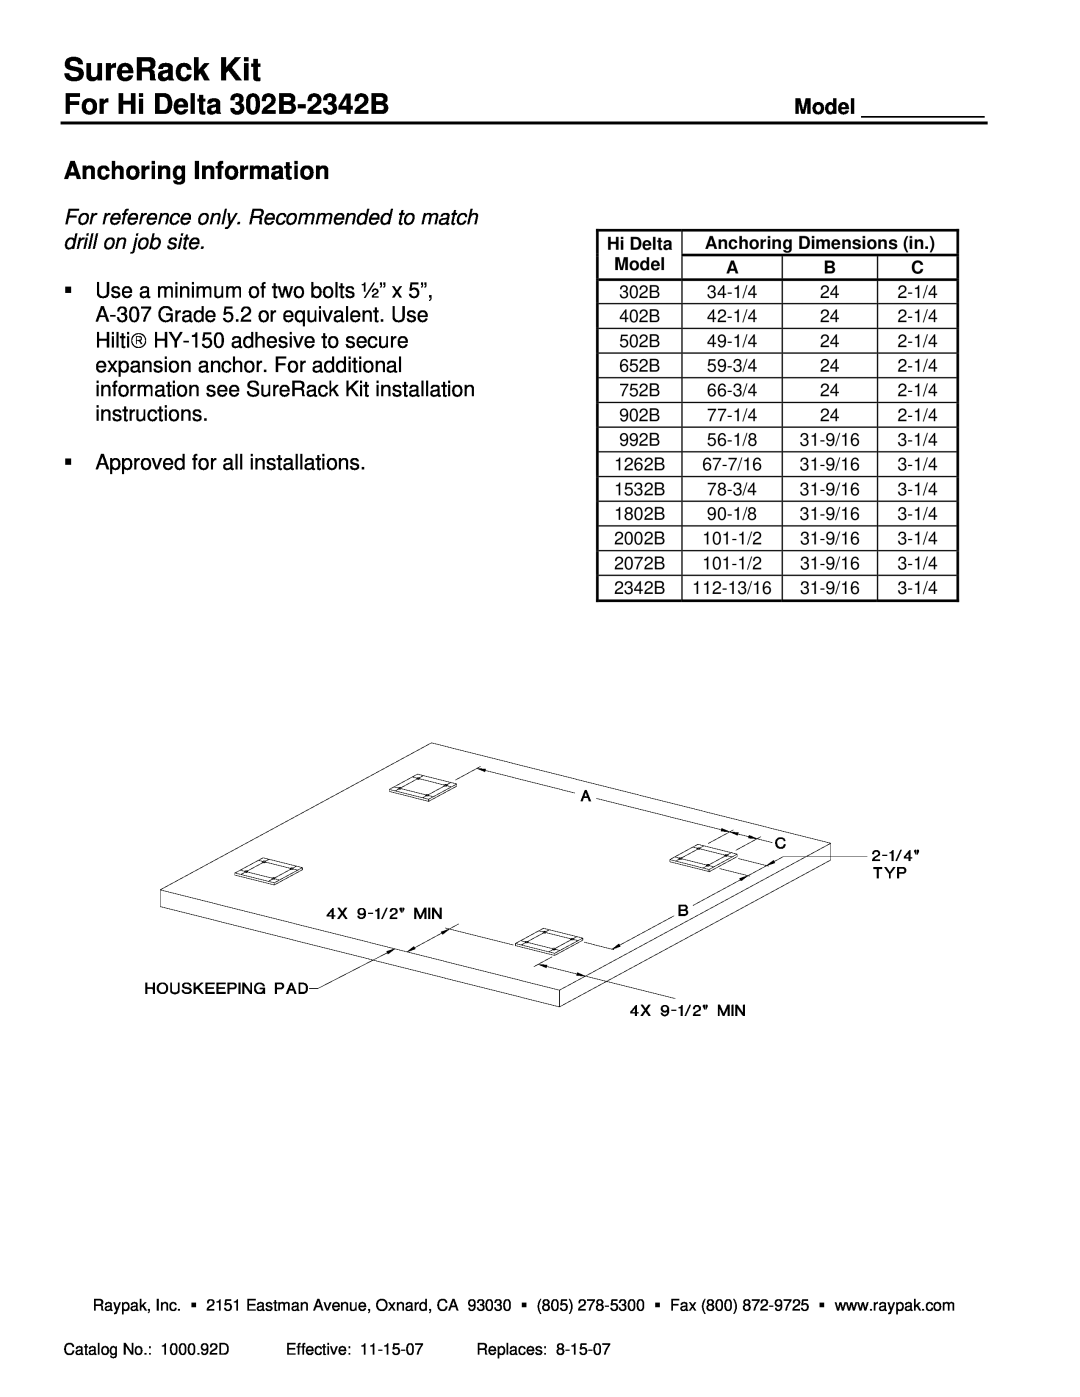 Raypak dimensions Model, ƒApproved for all installations, SureRack Kit, For Hi Delta 302B-2342B, Anchoring Information 